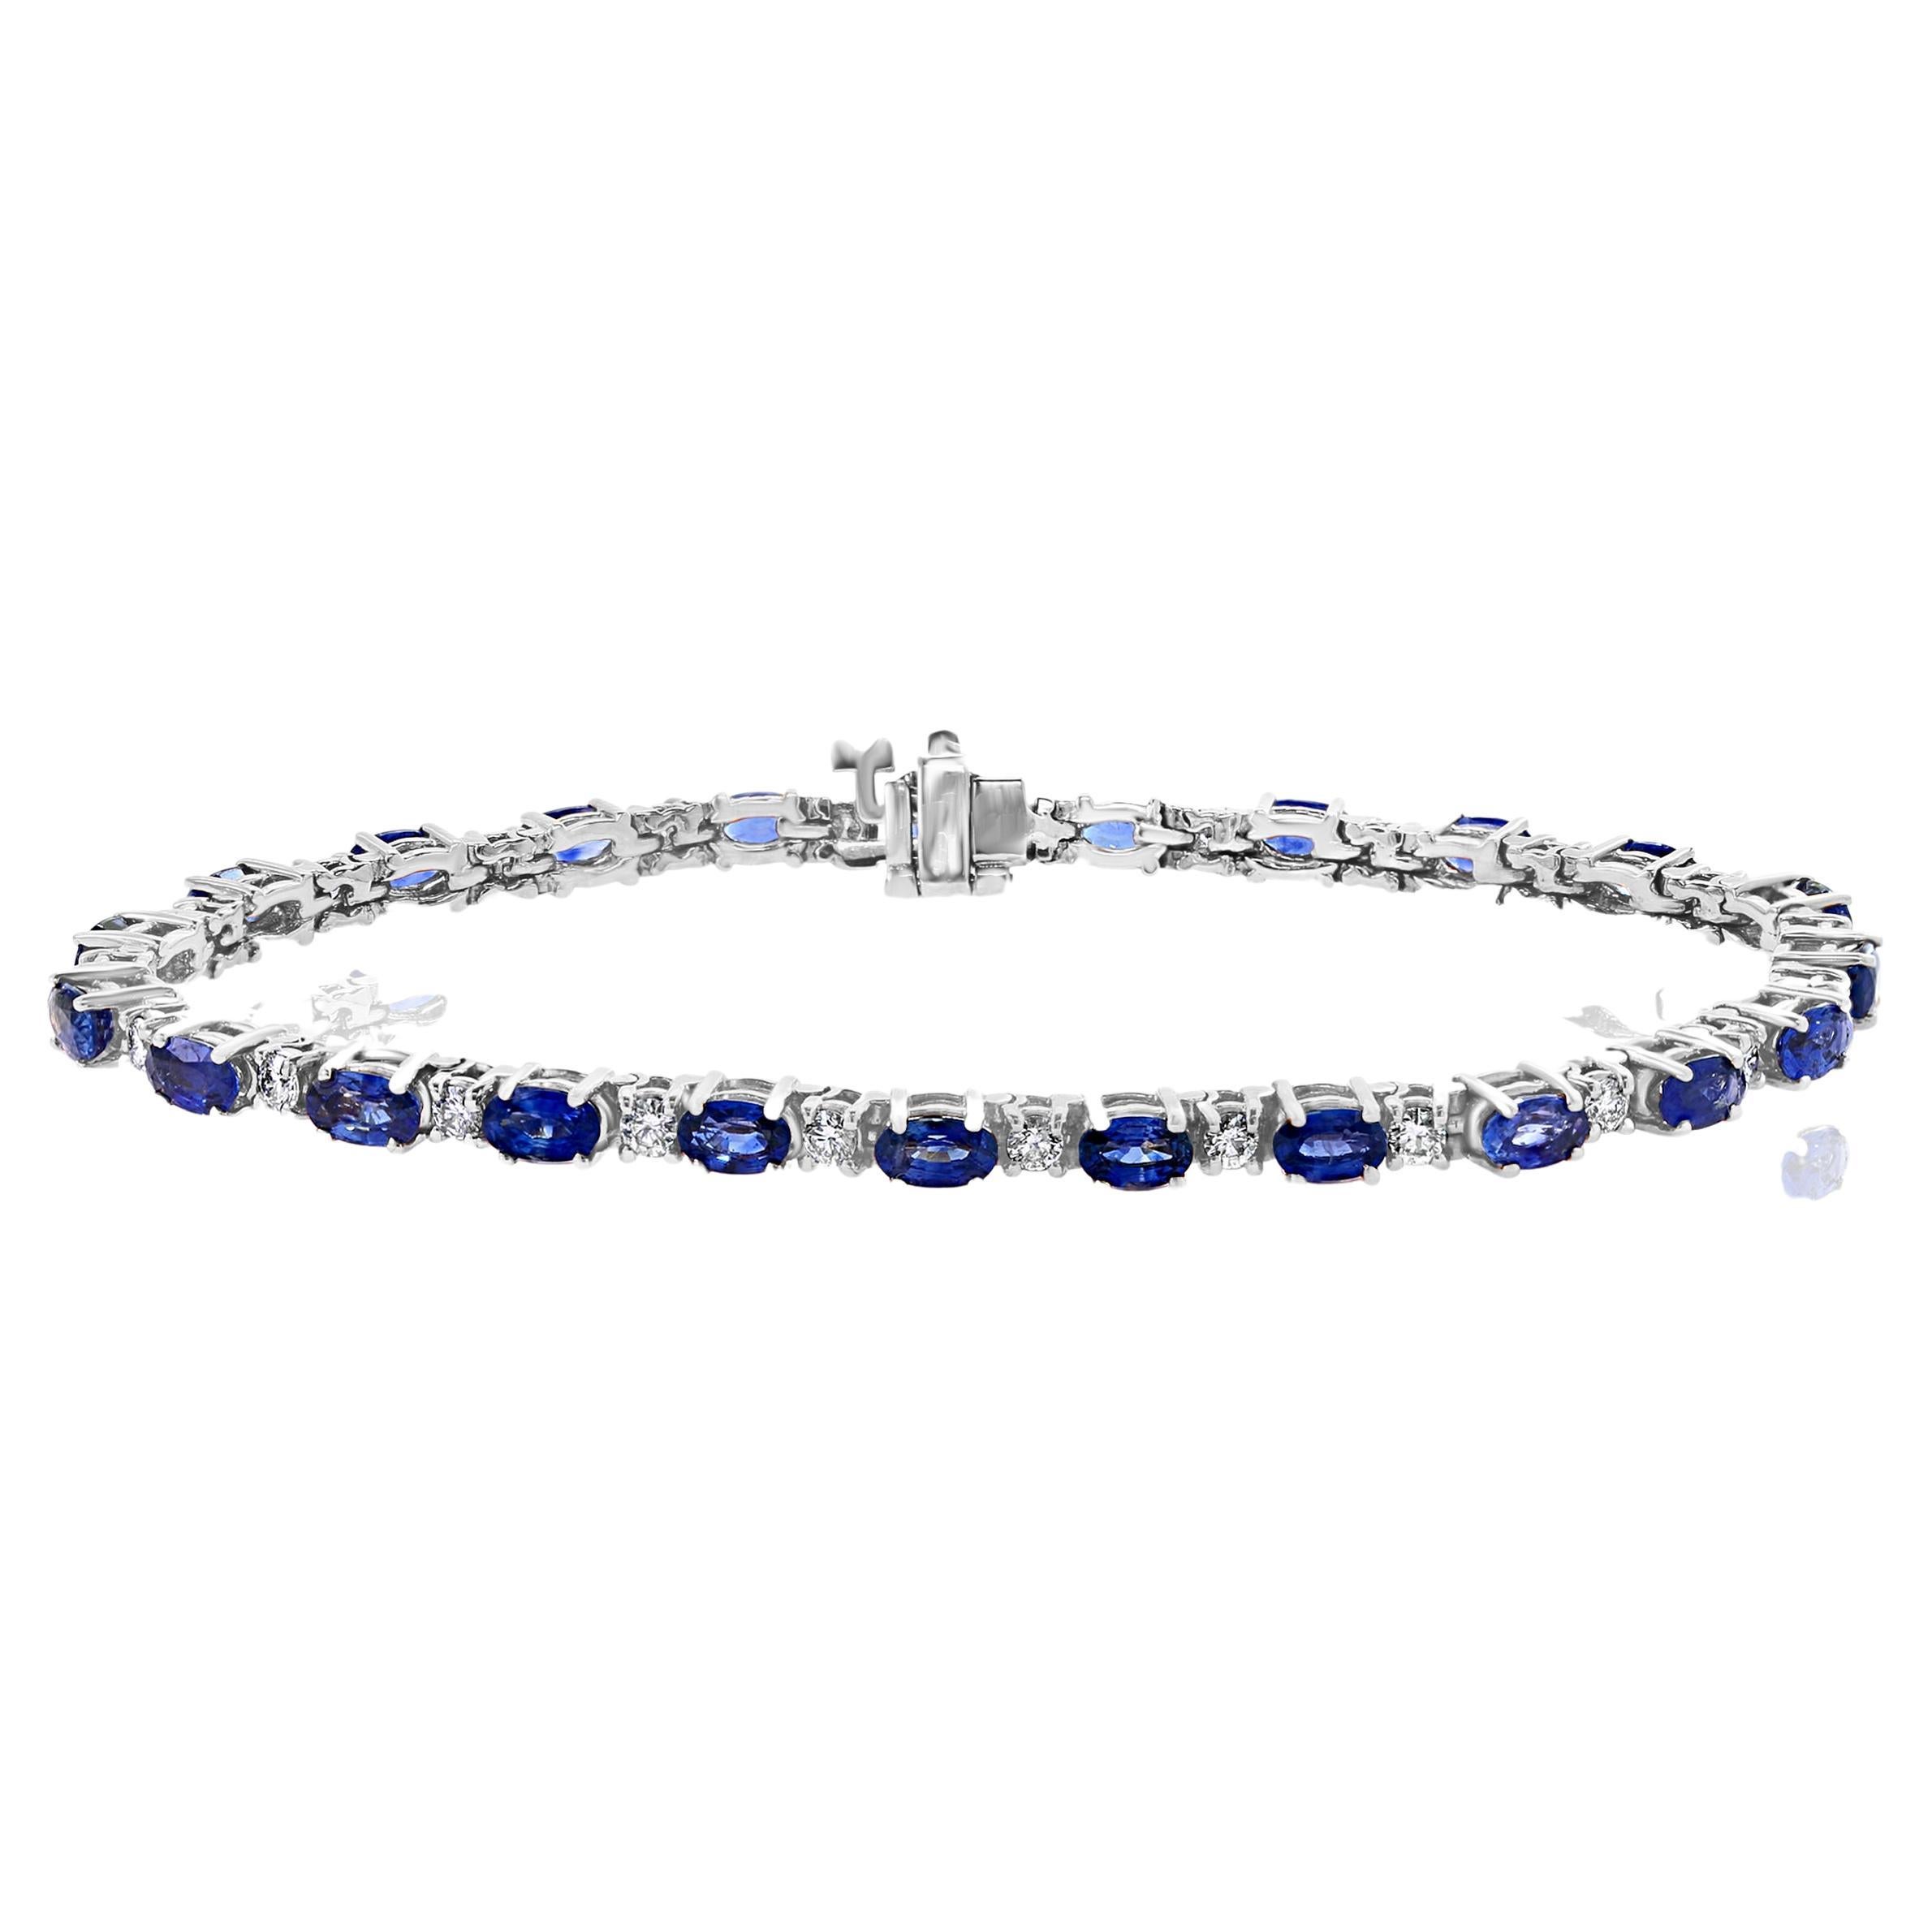 6.01 Carat Blue Sapphire and Diamond Tennis Bracelet in 14K White Gold